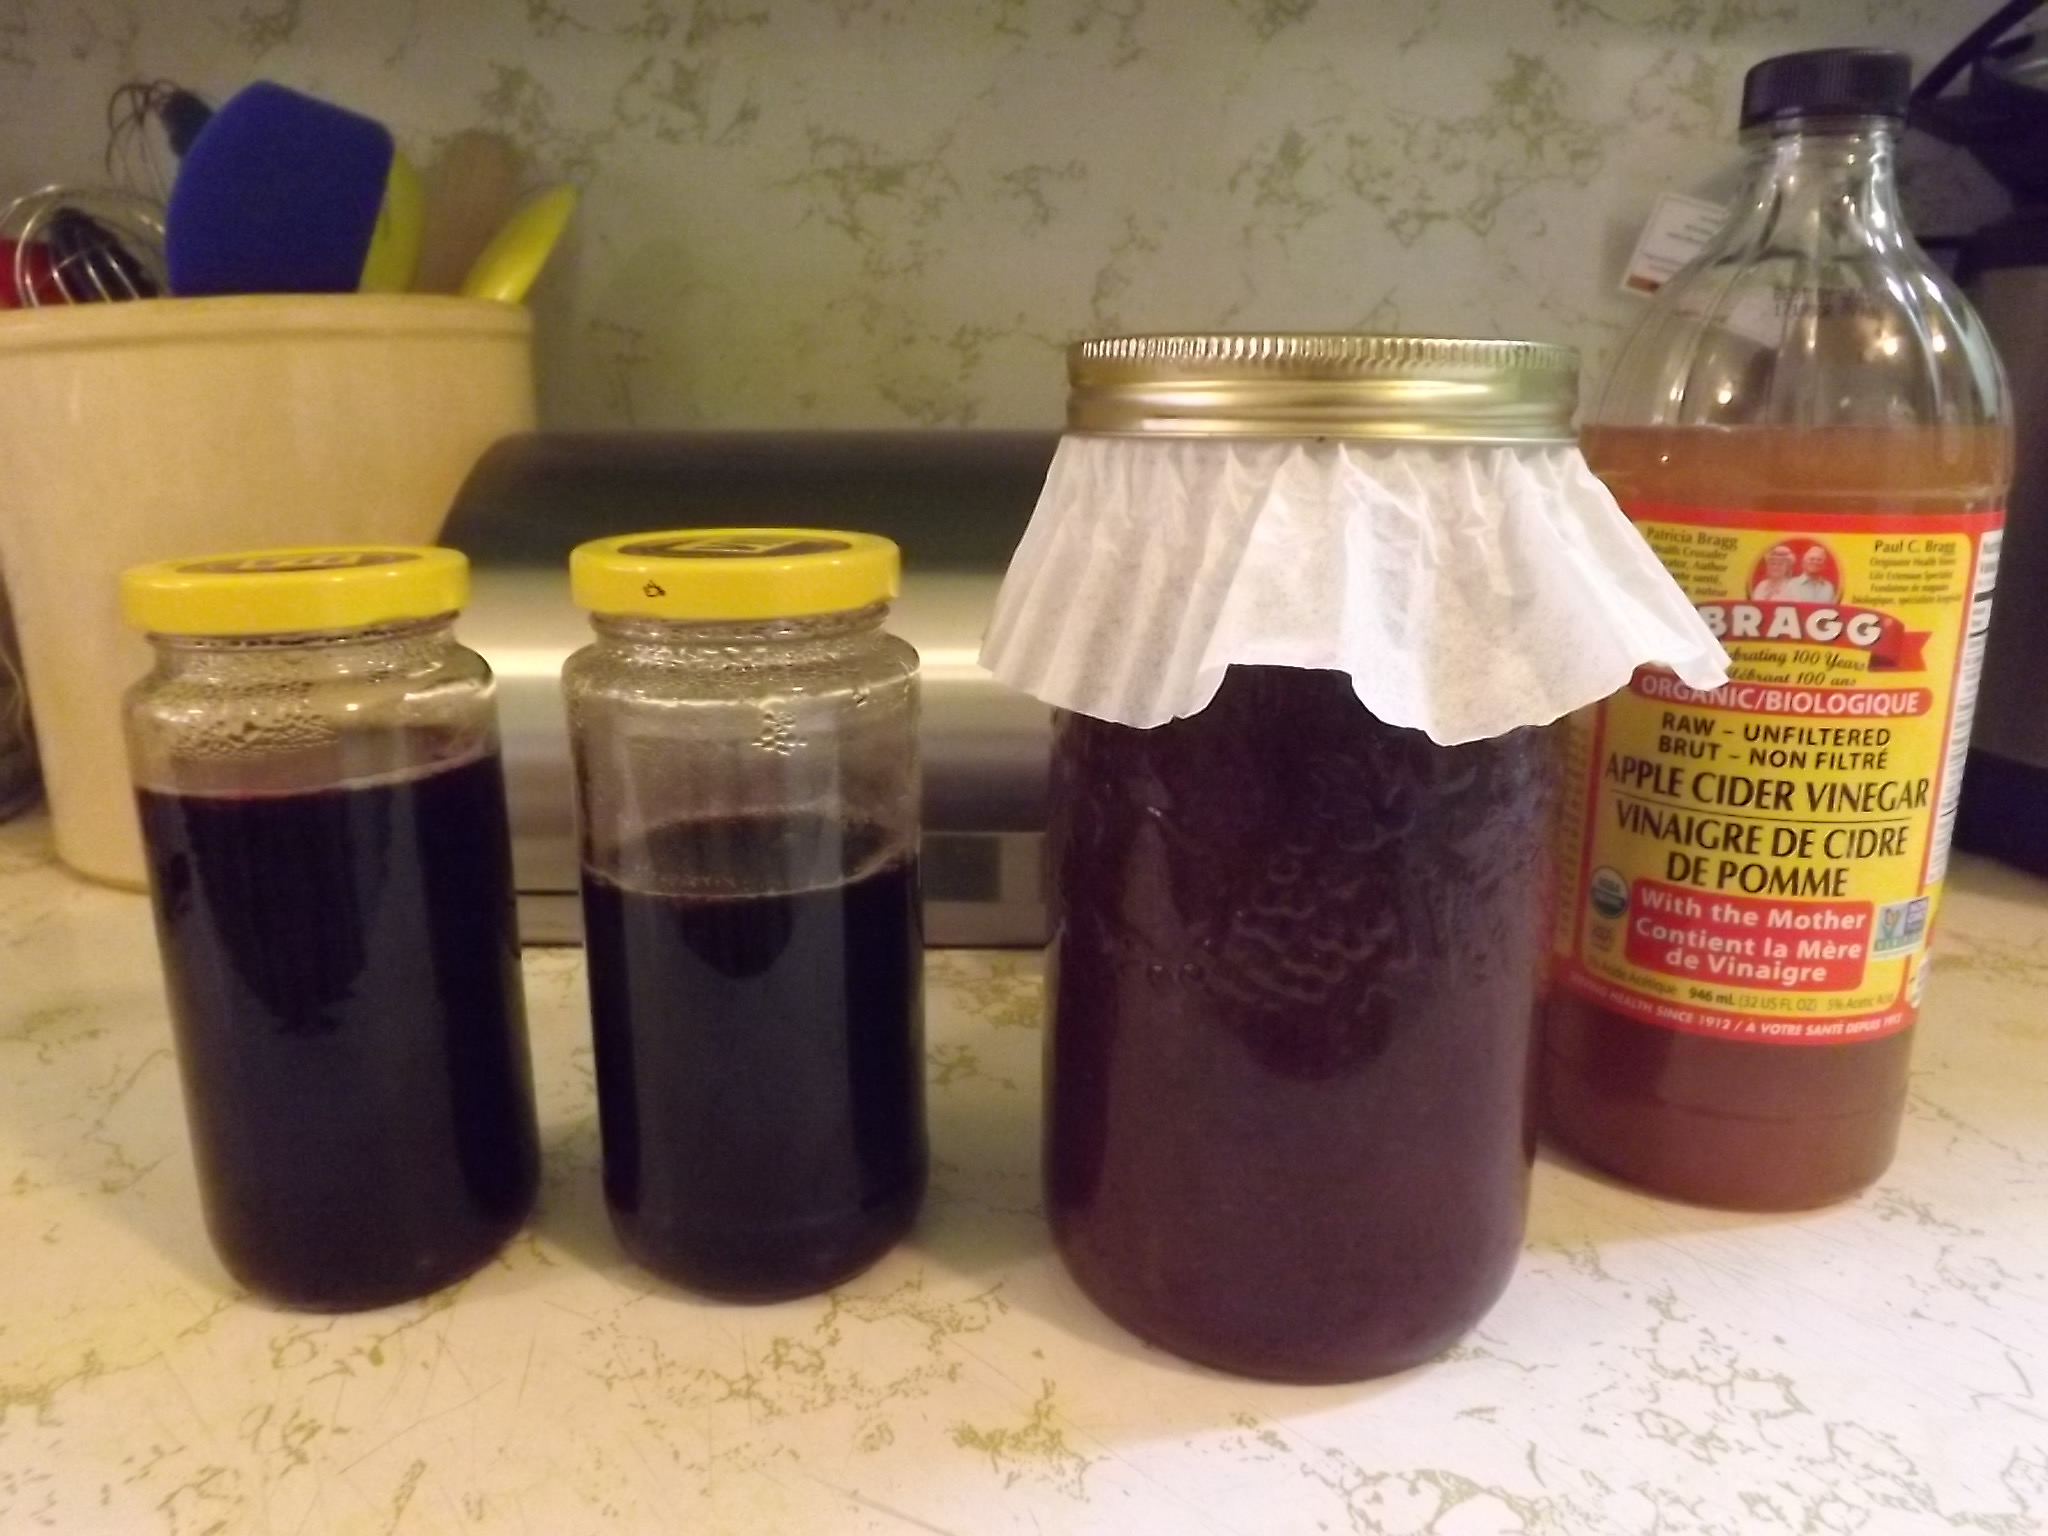 1 !/2 jars of Blackberry Syrup, and one jar of future Blackberry Vinegar.